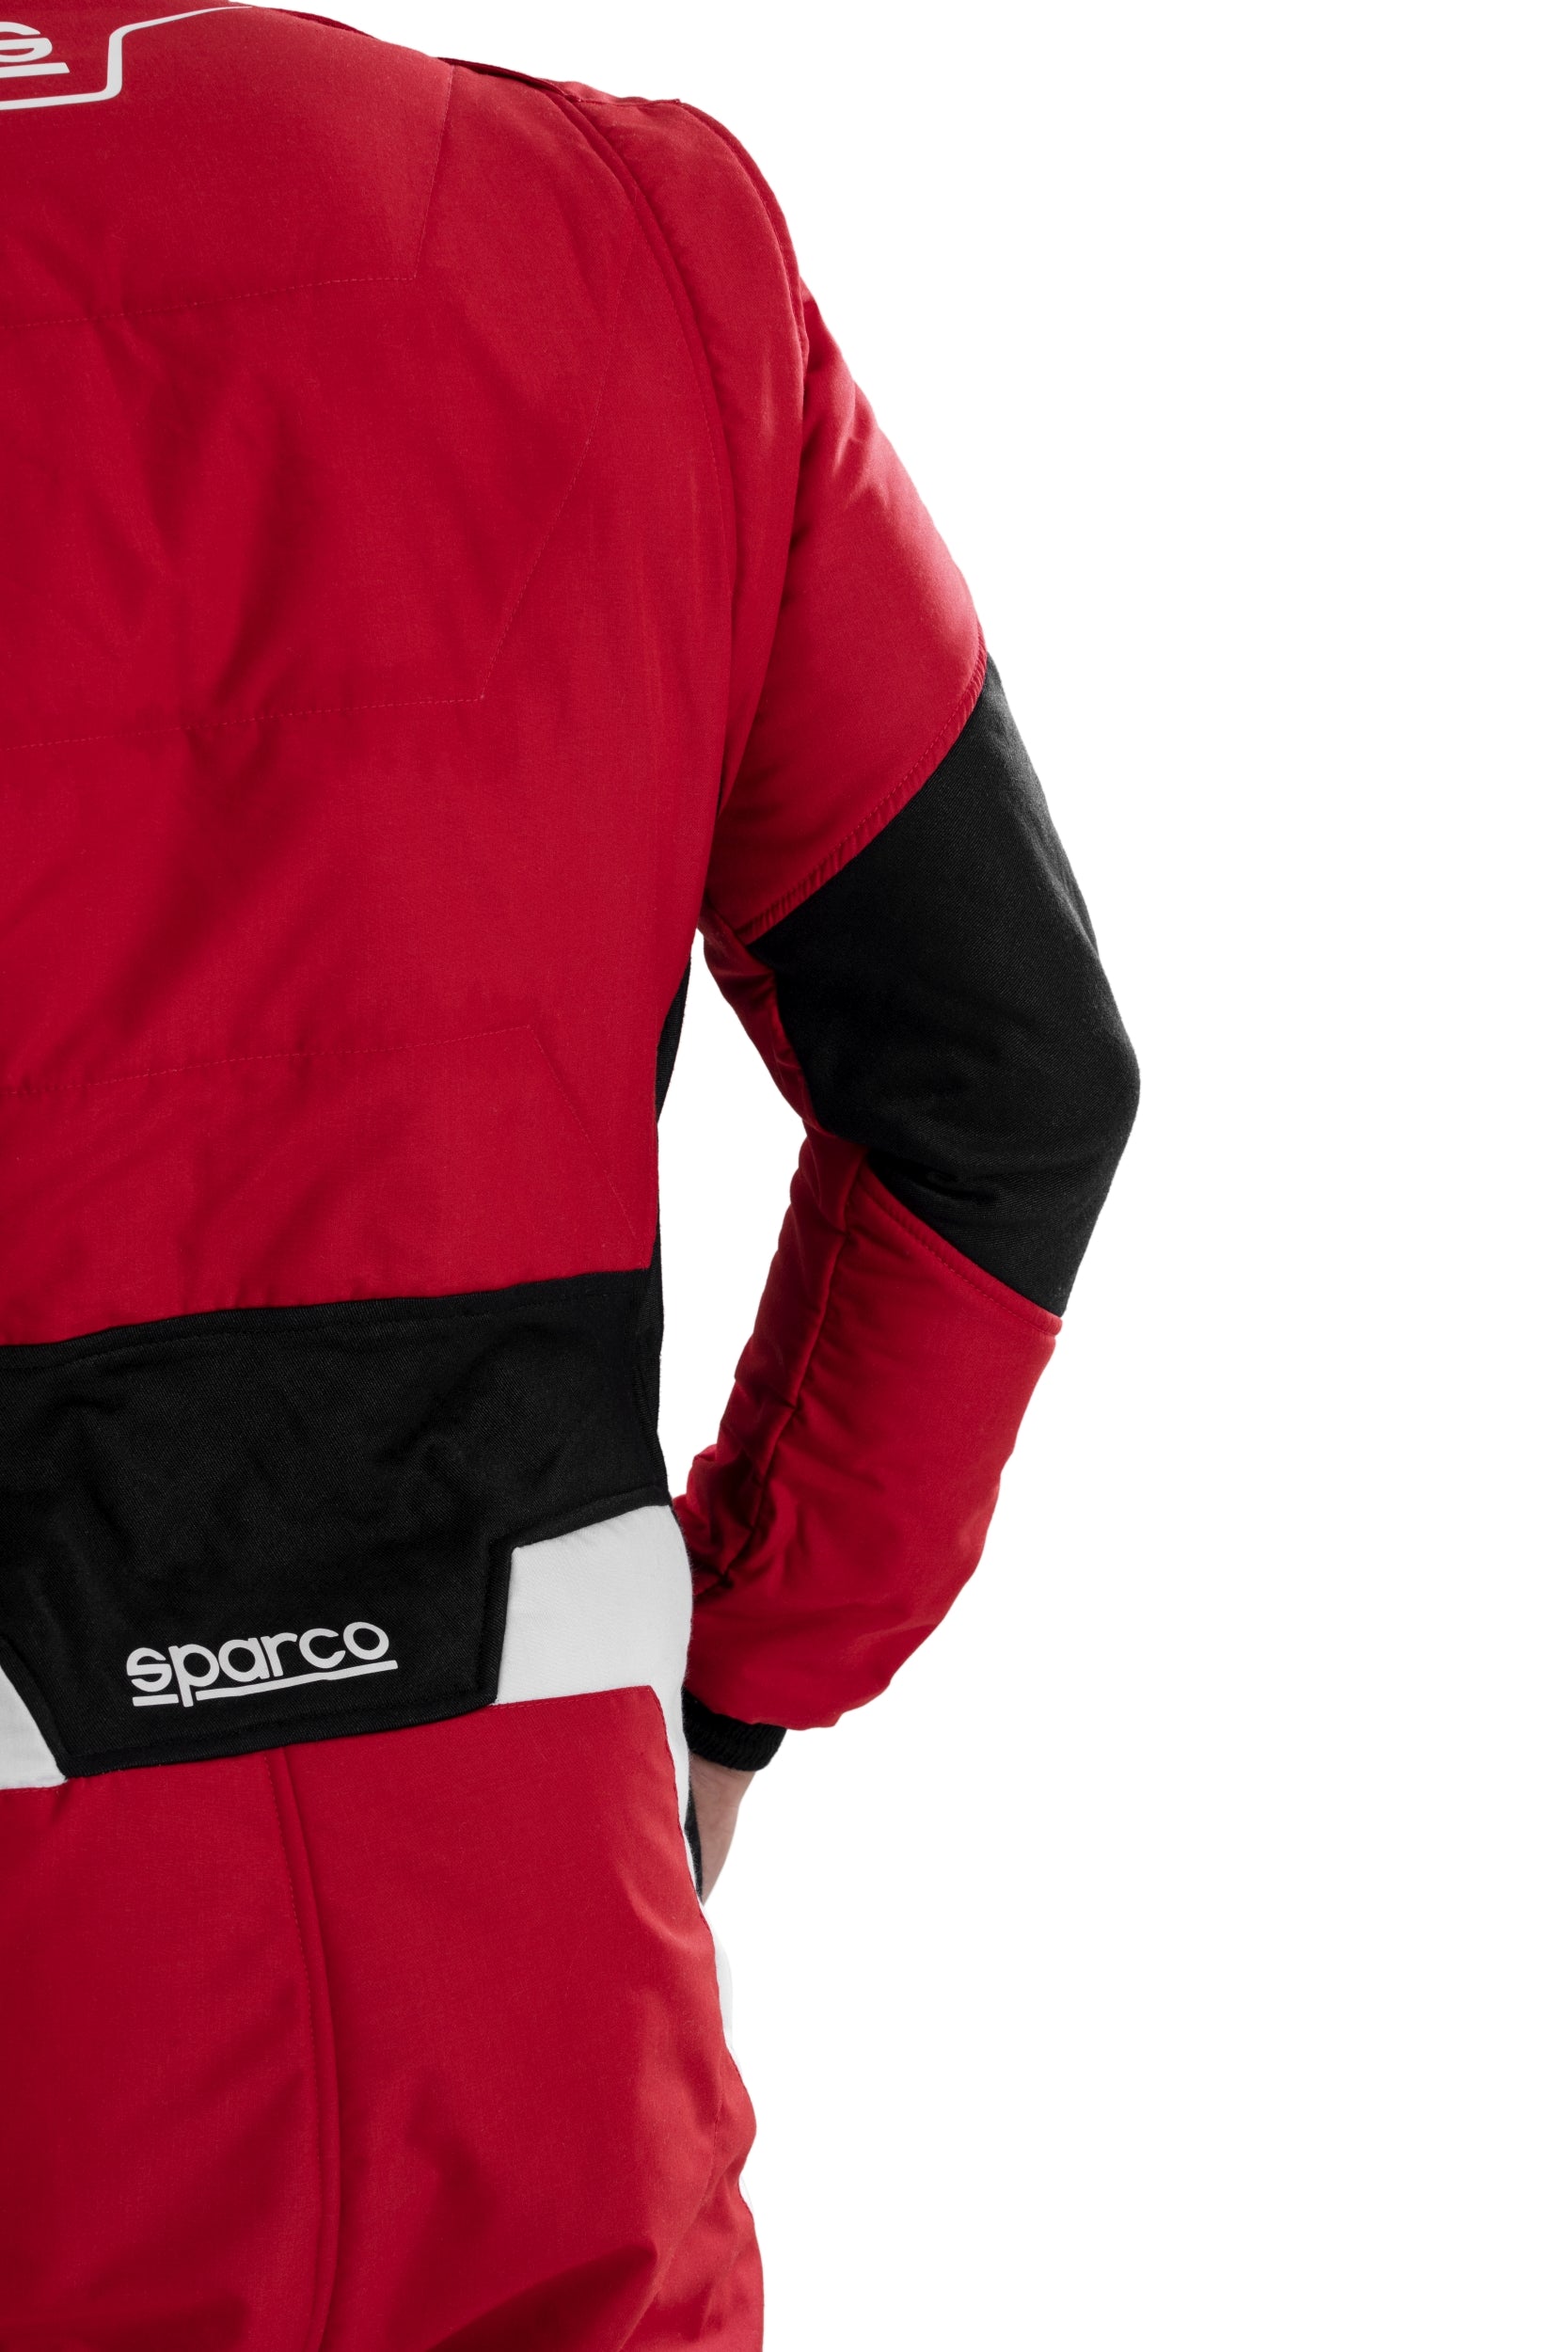 SPARCO 00114254RNBI Racing suit SUPERLEGGERA R564, FIA 8856-2018, red/black/white, size 54 Photo-3 